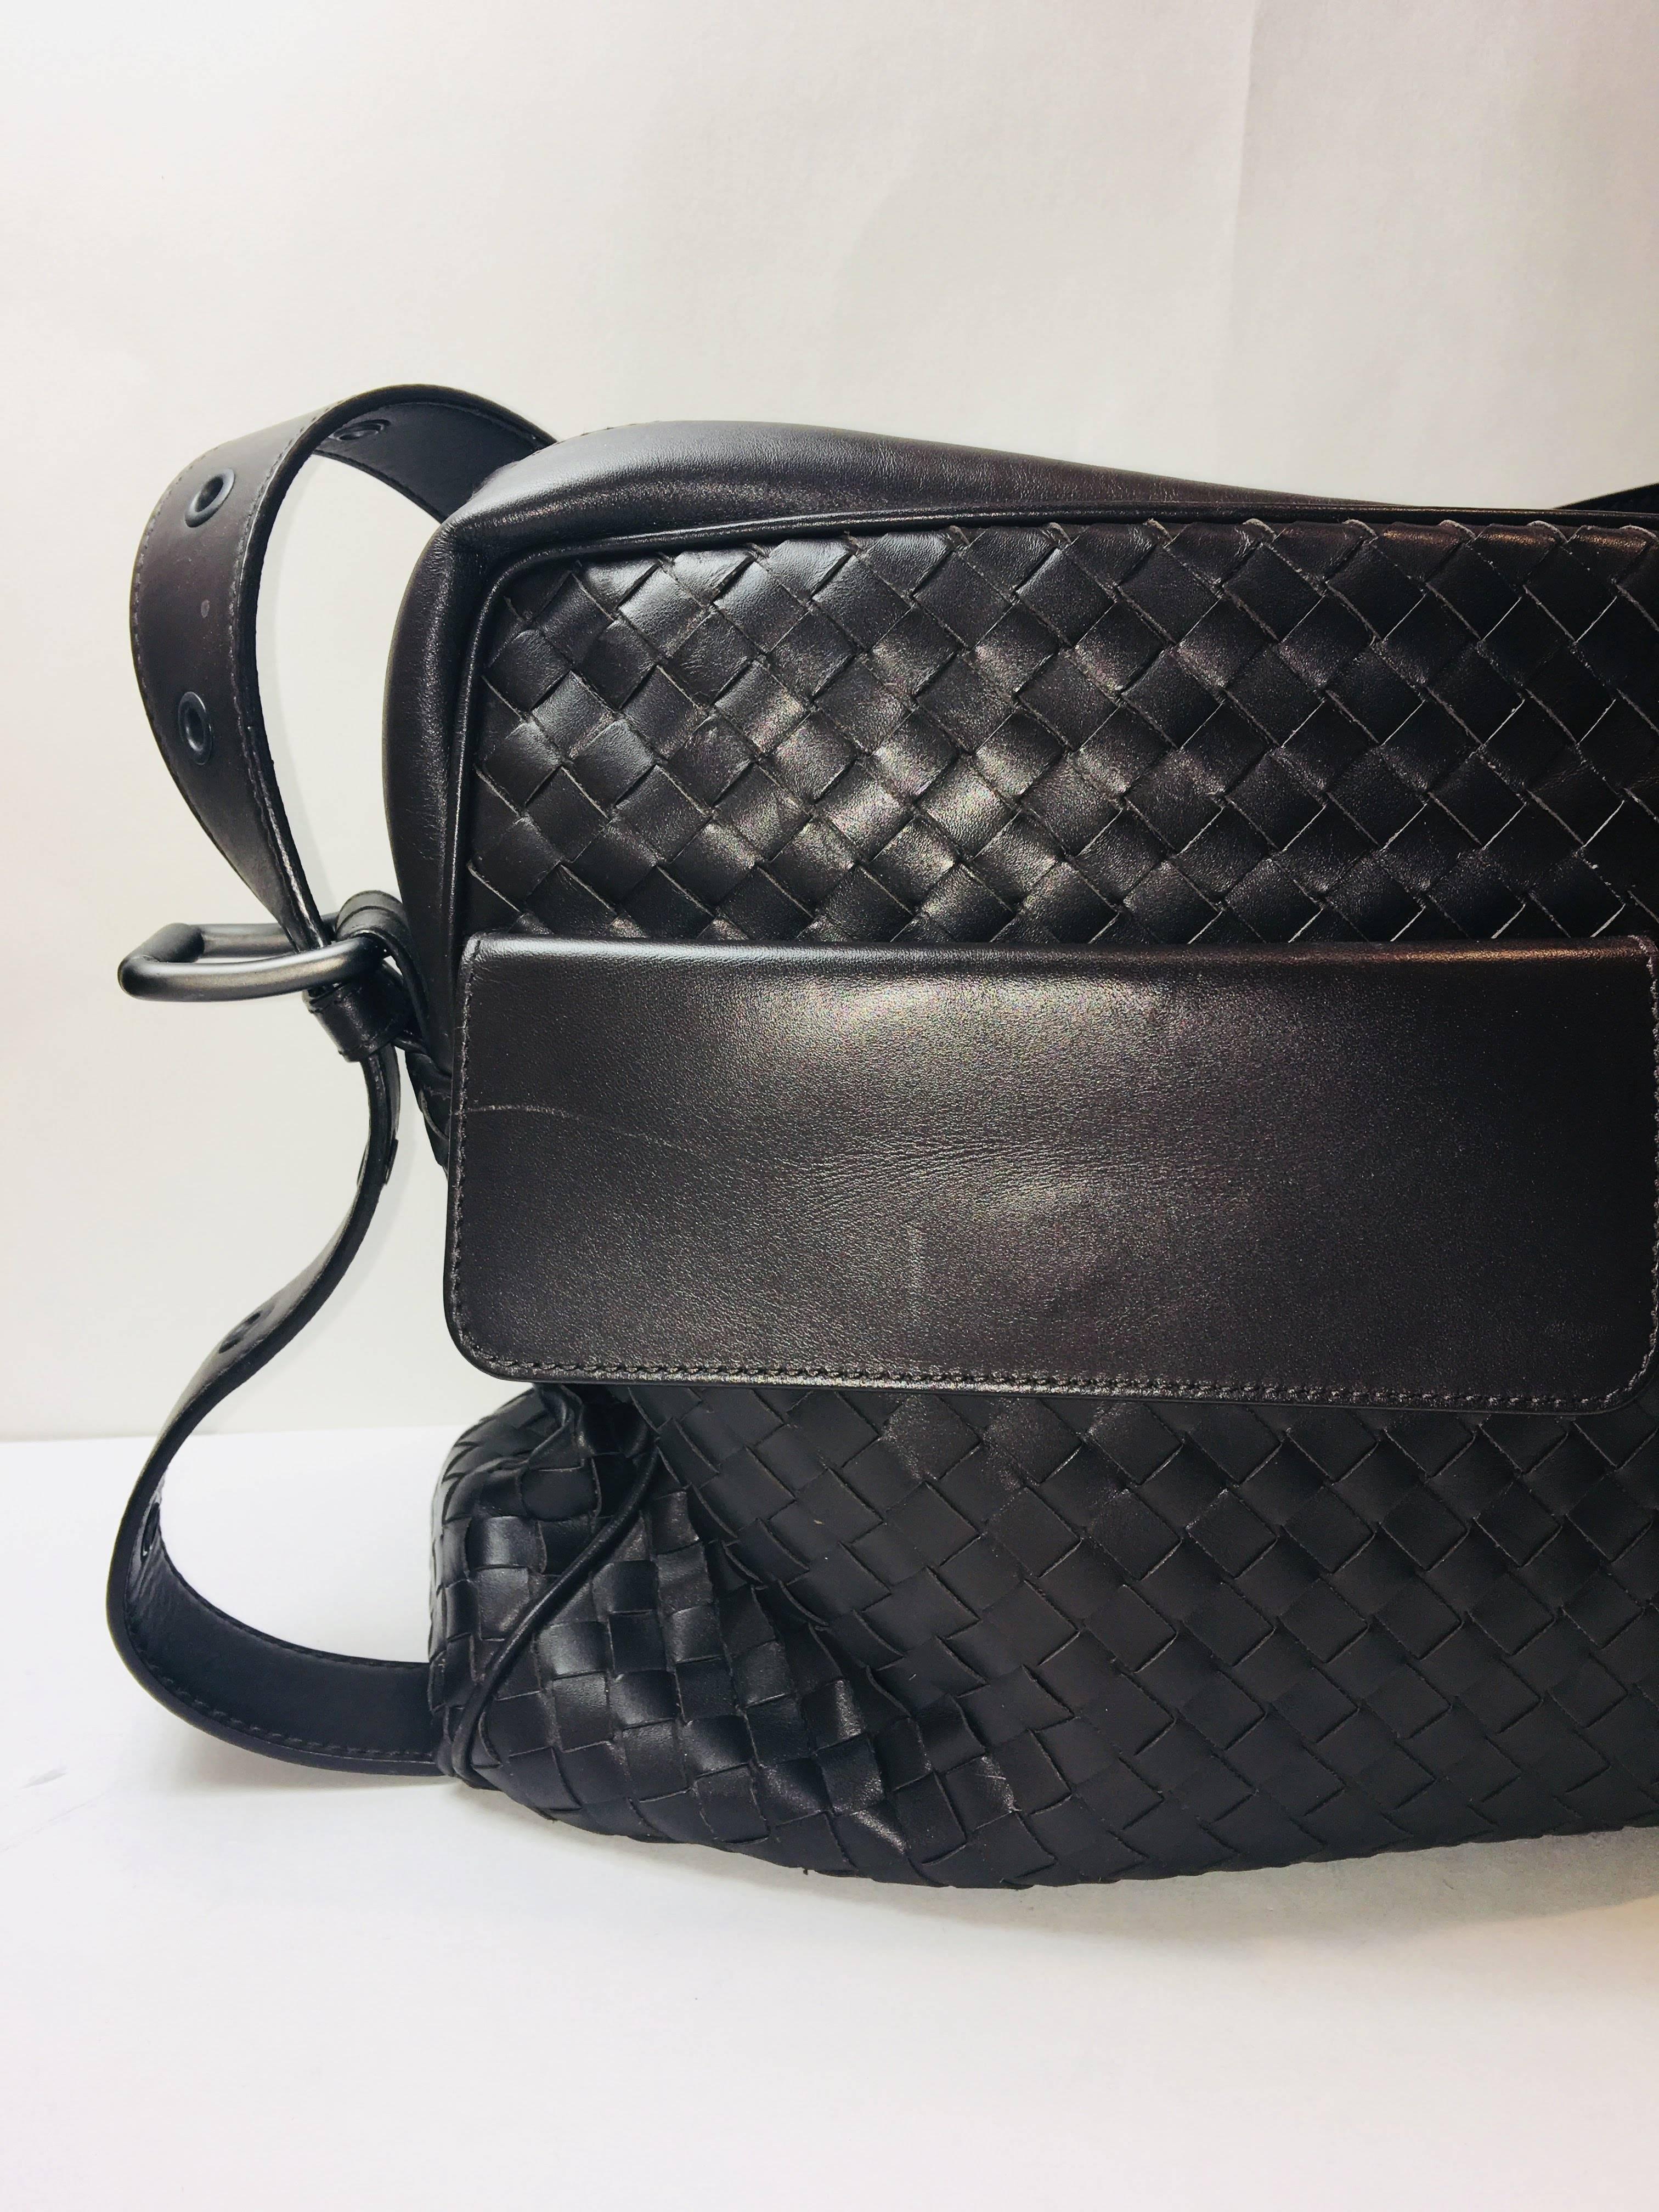 Bottega Veneta Unisex Classic Messenger Bag in Brown Leather with Weave Detail.